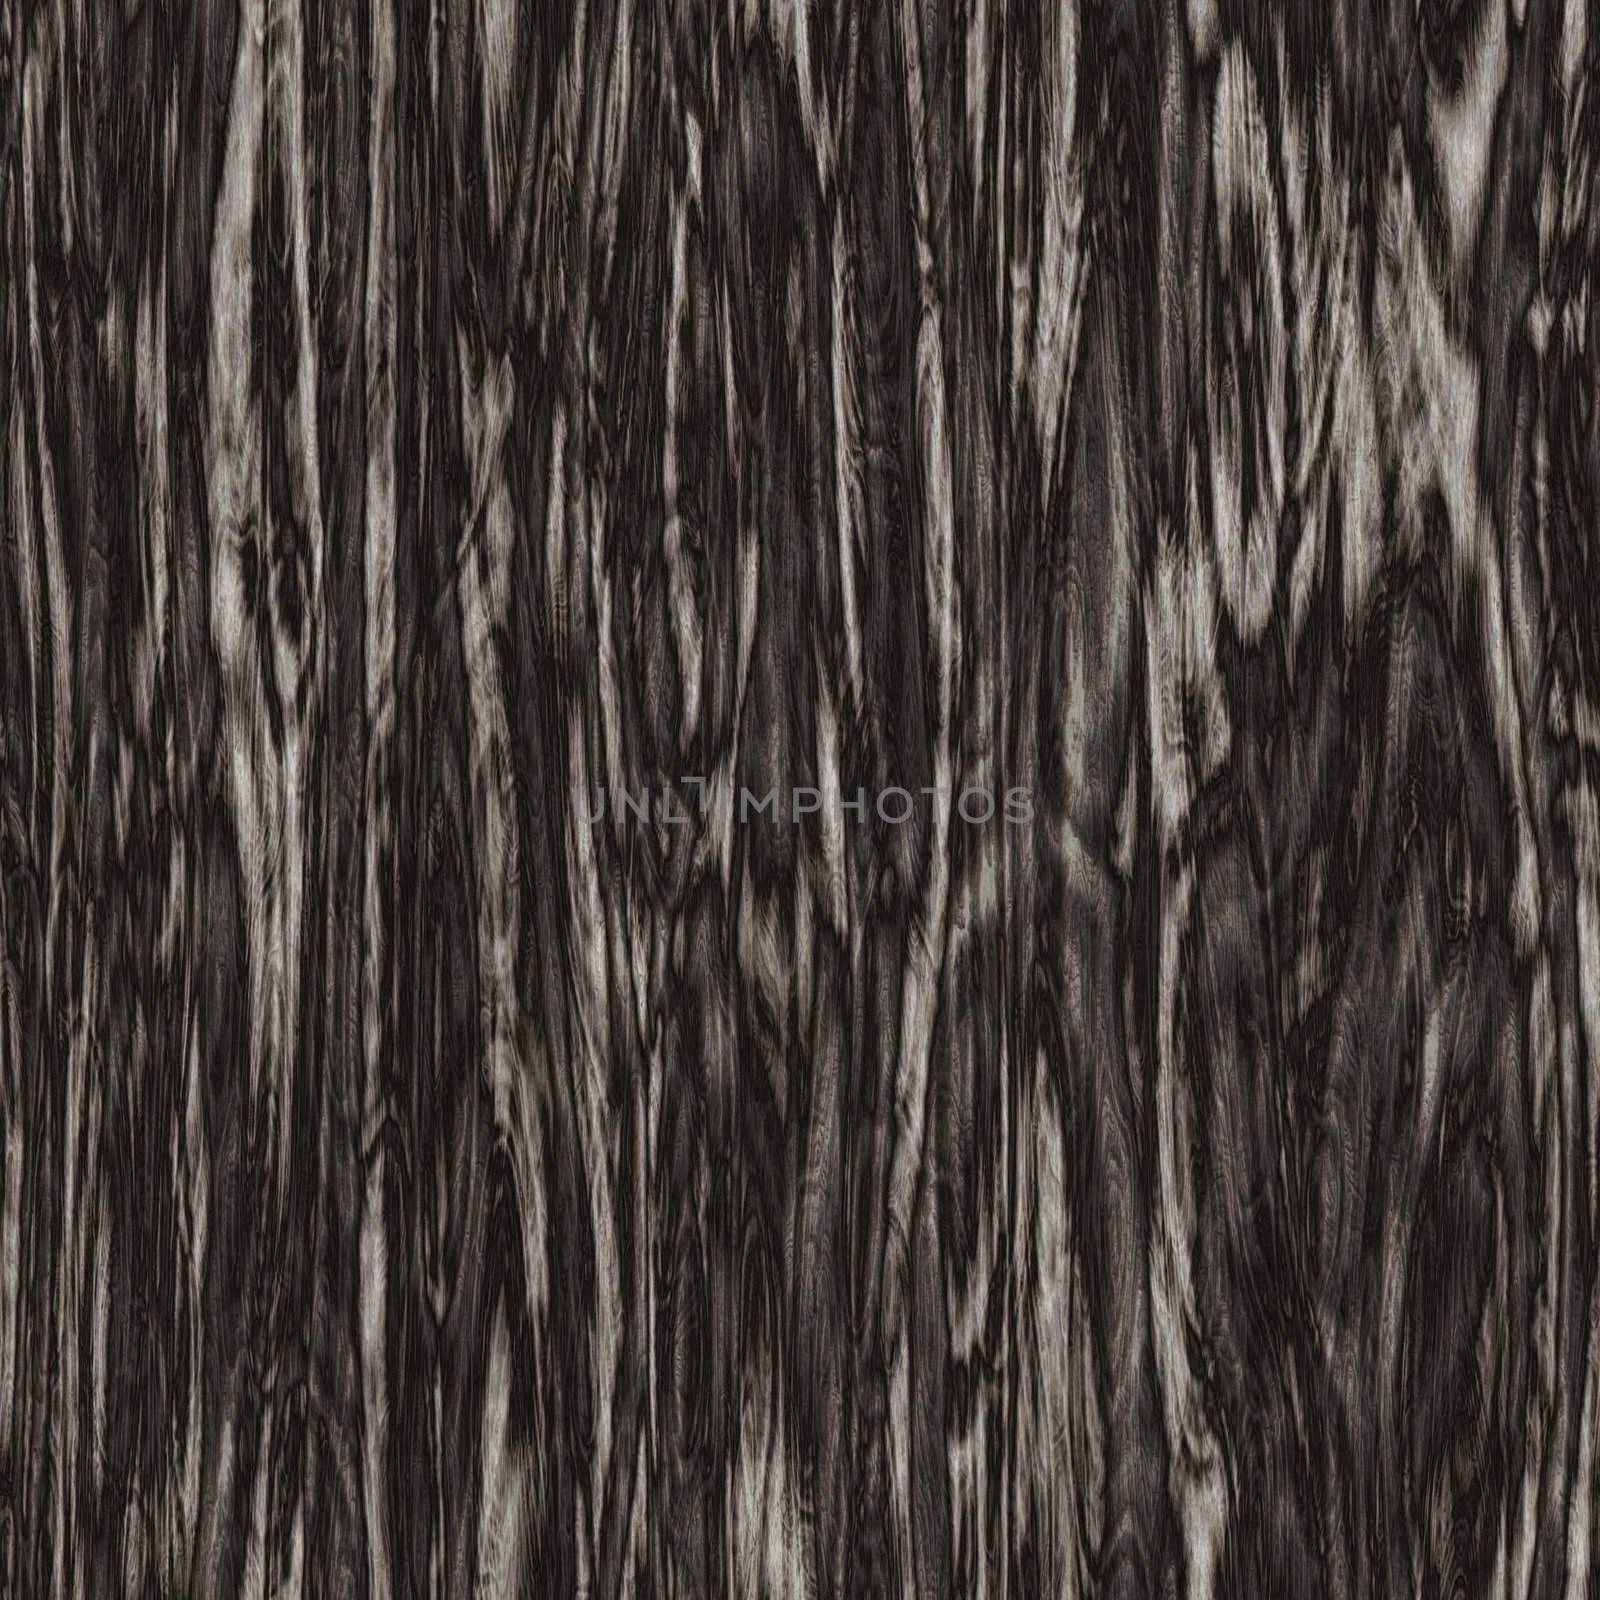 Seamless texture of black wood background closeup